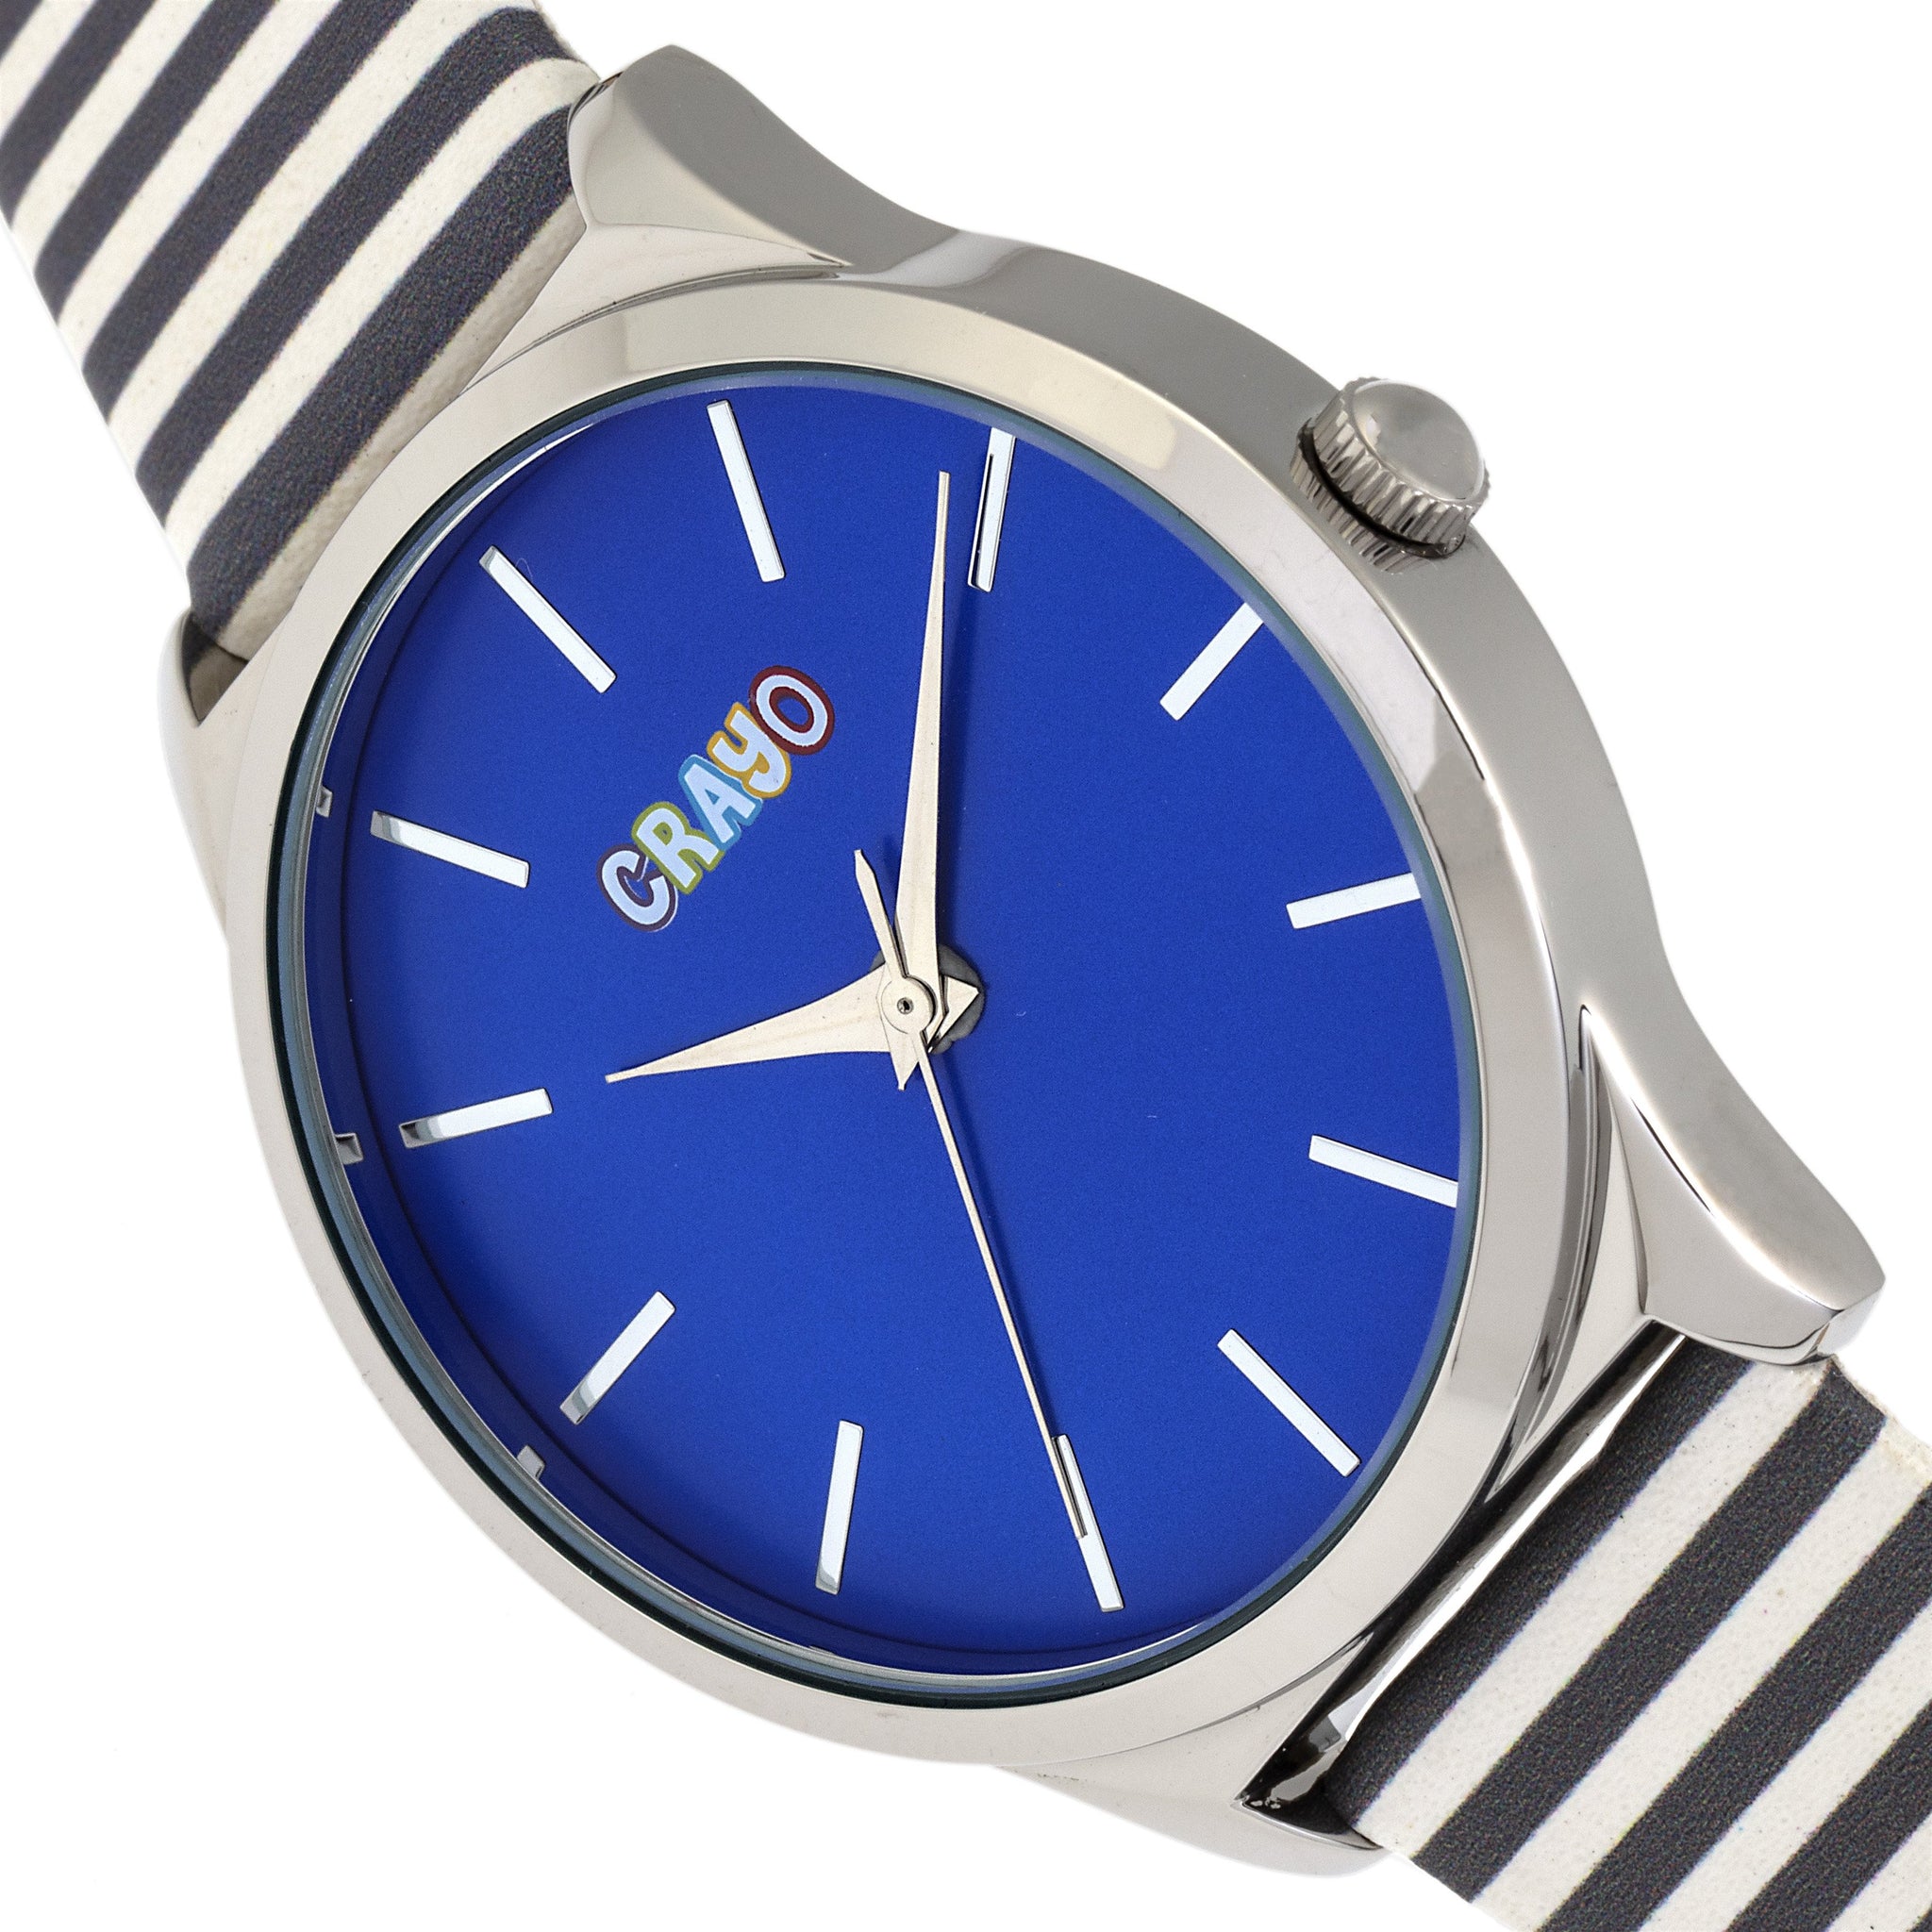 Crayo Aboard Unisex Watch - Blue - CRACR5602